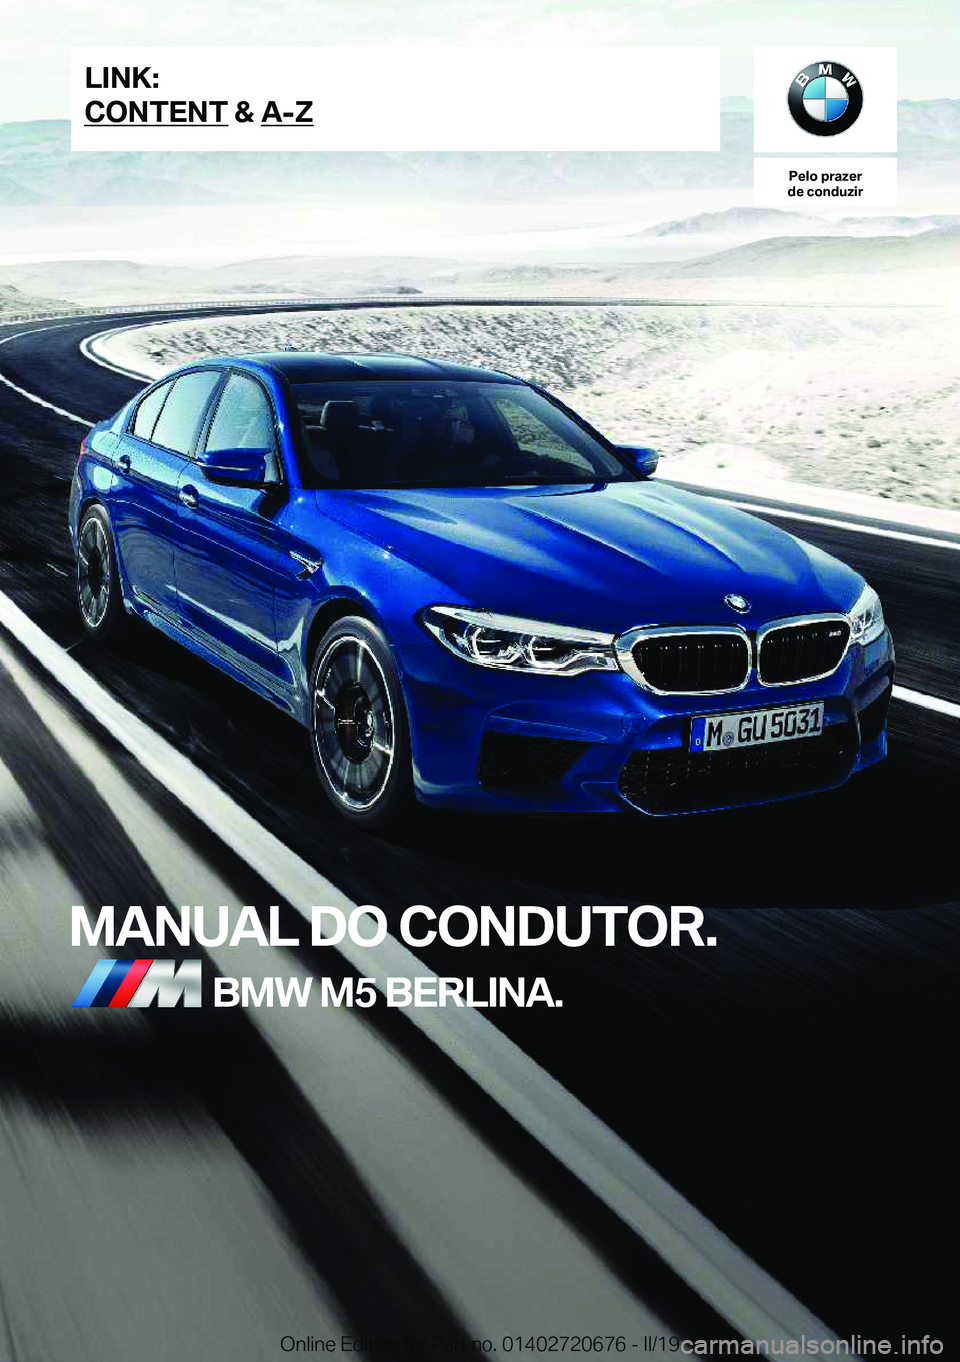 BMW M5 2019  Manual do condutor (in Portuguese) �P�e�l�o��p�r�a�z�e�r
�d�e��c�o�n�d�u�z�i�r
�M�A�N�U�A�L��D�O��C�O�N�D�U�T�O�R�.�B�M�W��M�5��B�E�R�L�I�N�A�.�L�I�N�K�:
�C�O�N�T�E�N�T��&��A�-�Z�O�n�l�i�n�e��E�d�i�t�i�o�n��f�o�r��P�a�r�t��